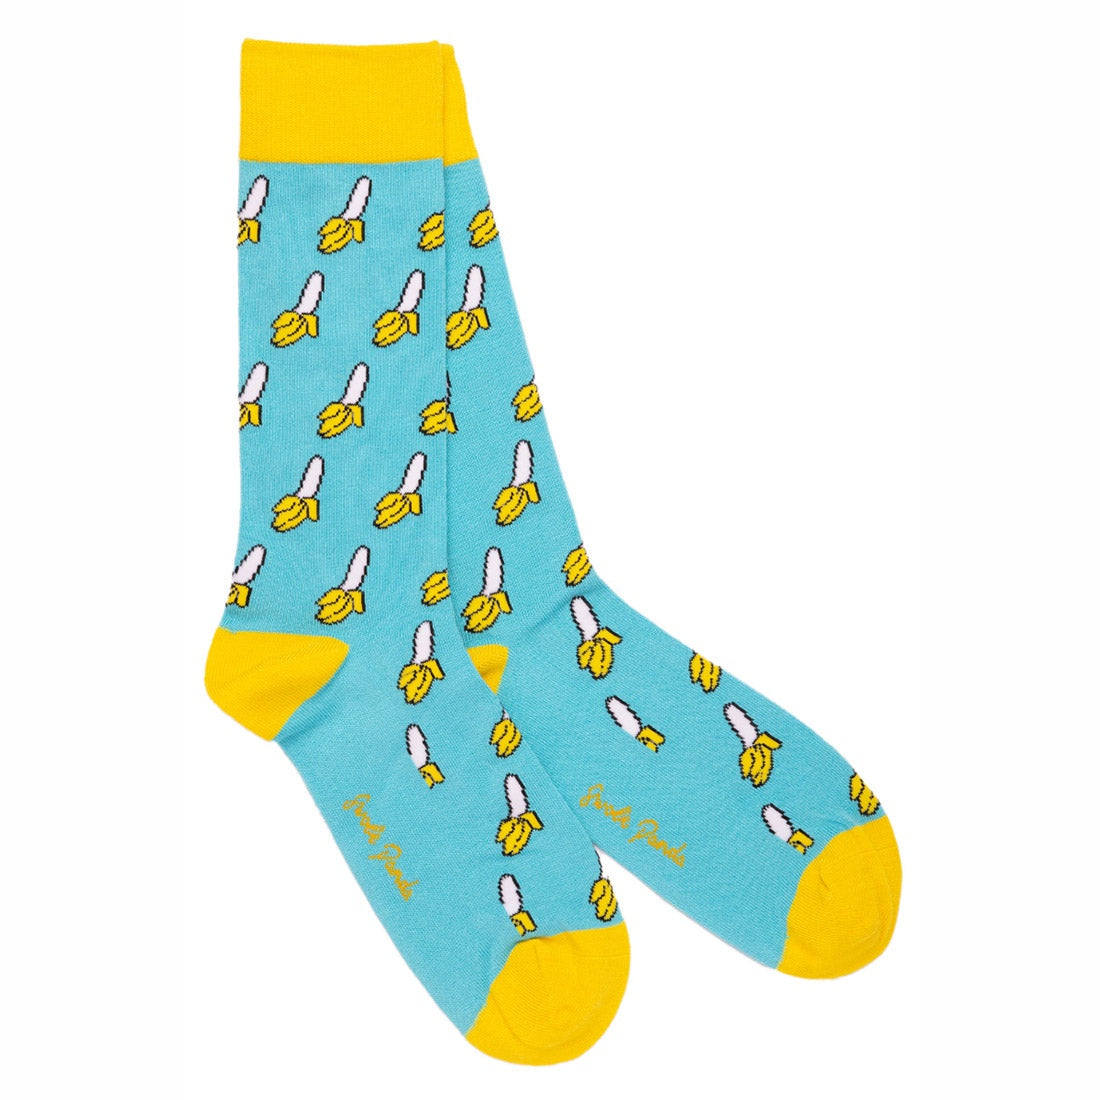 Swole Panda Socks - Banana